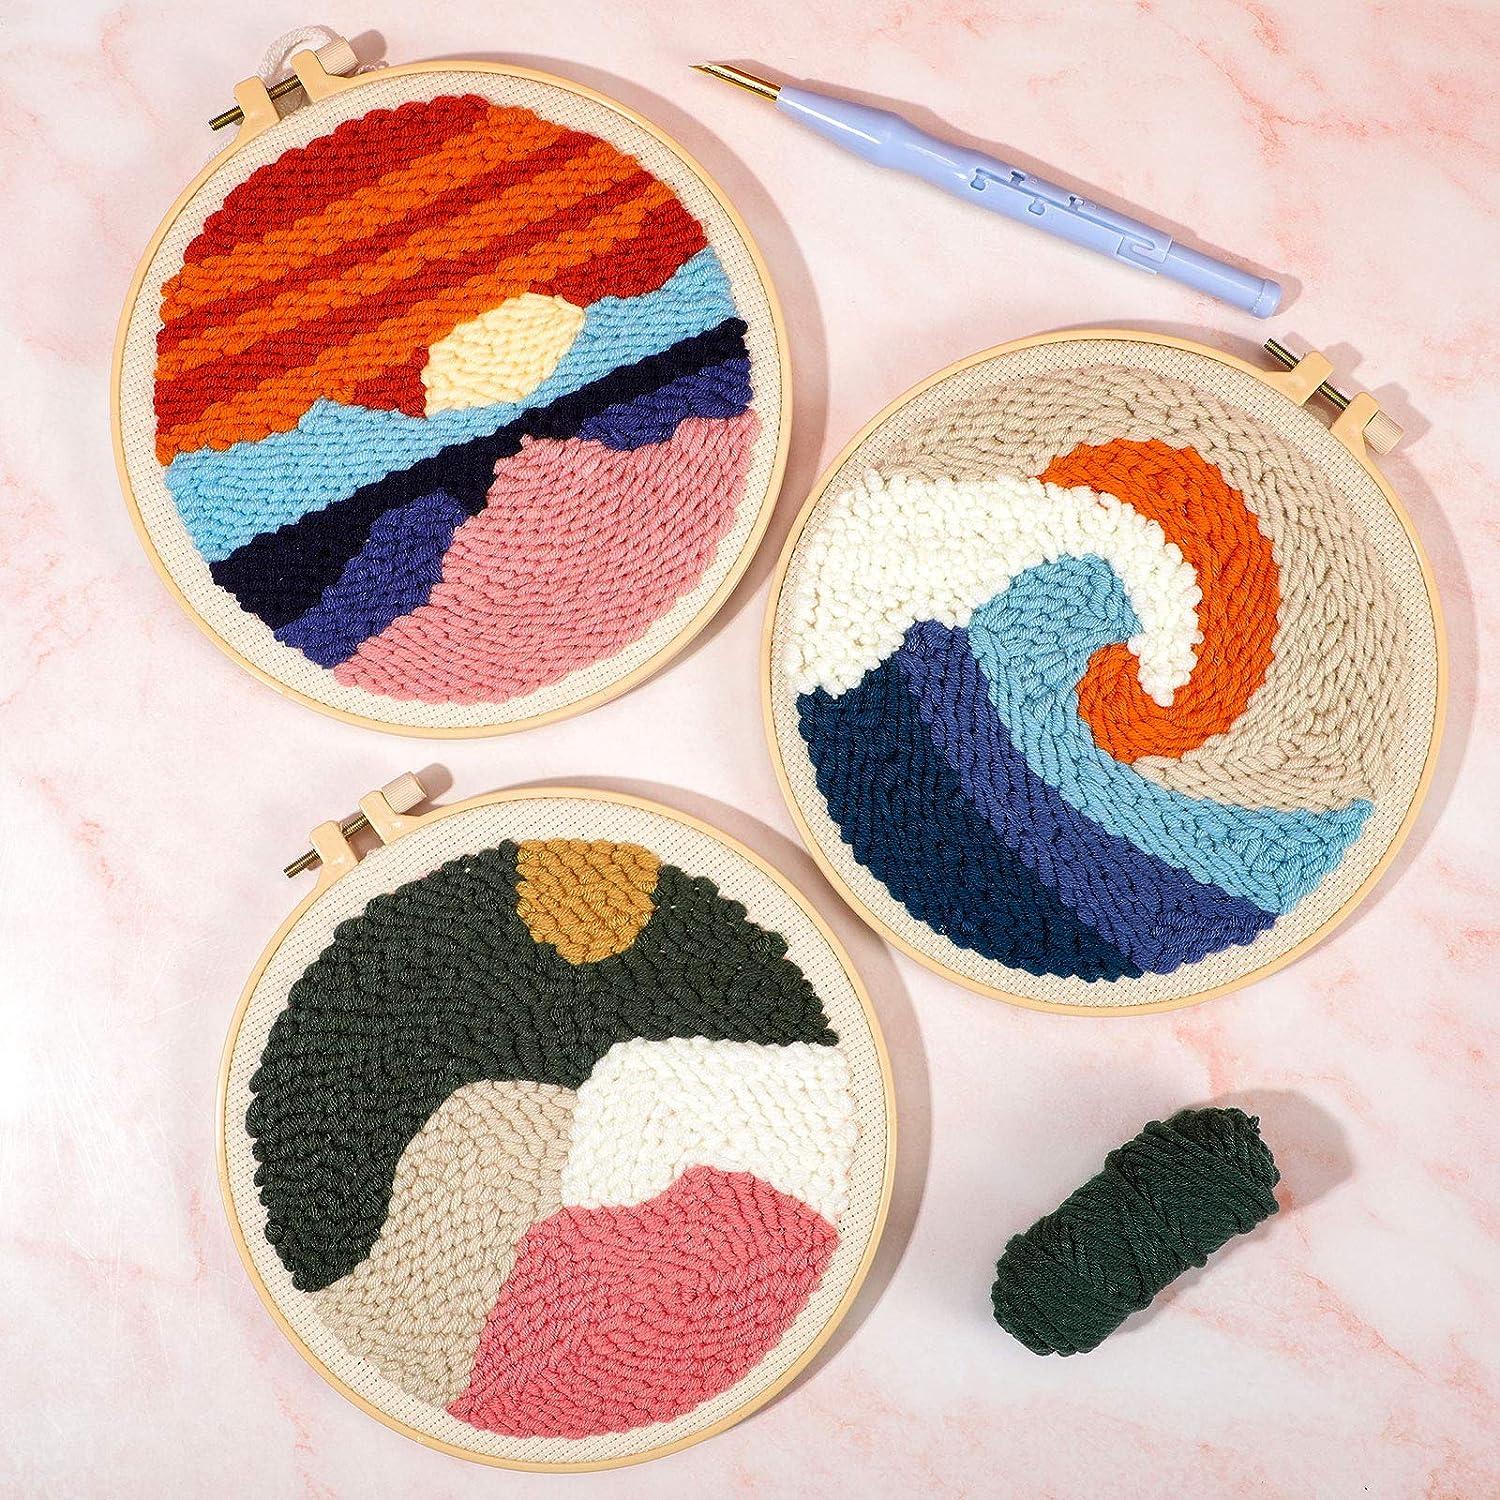  Embroidery Kit for Beginners 'Hello' - Fun Starter Kit